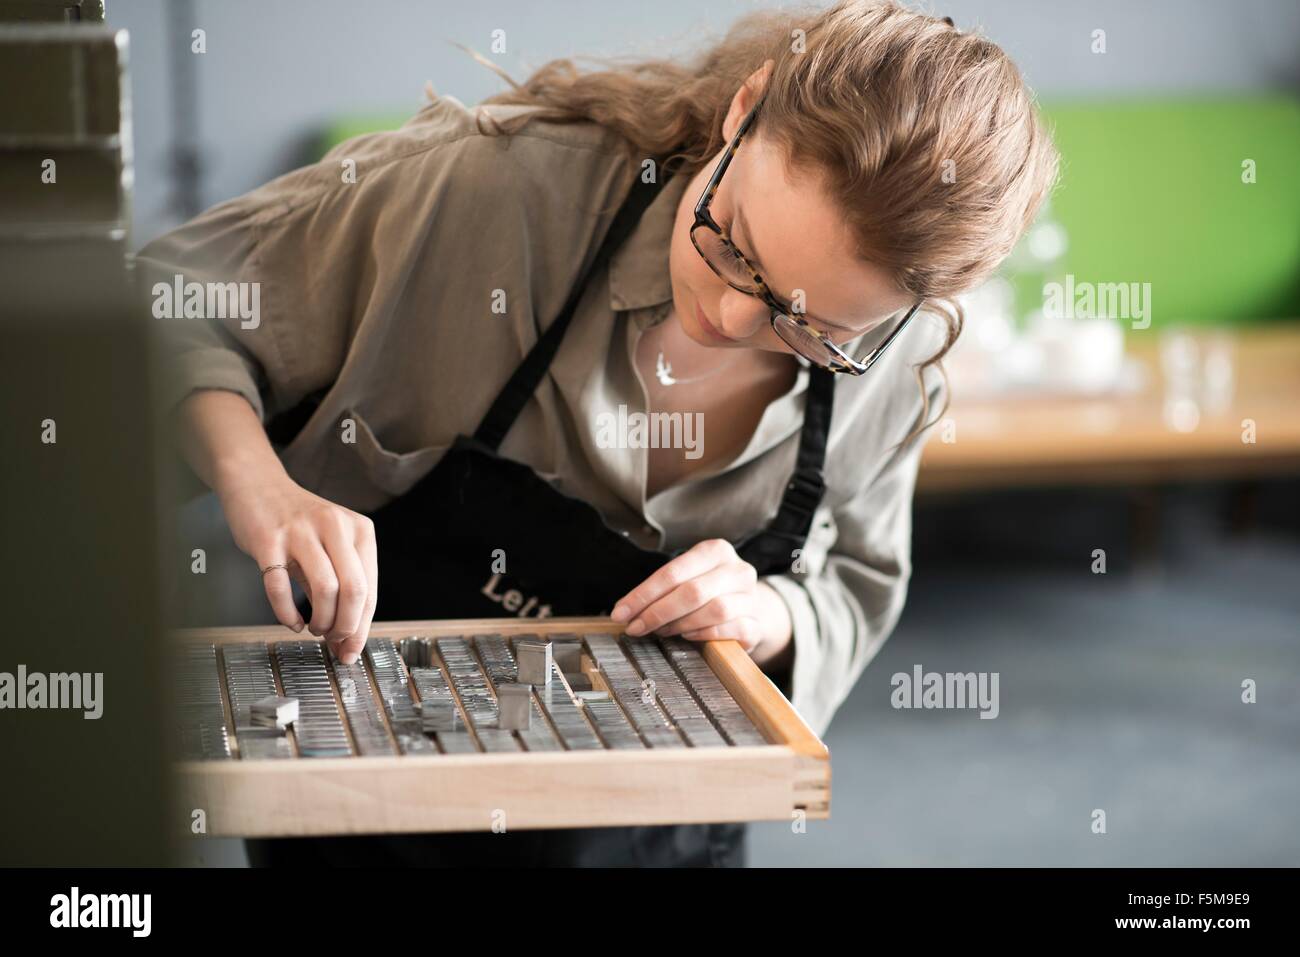 Woman choosing letterpress from tray in print workshop Stock Photo